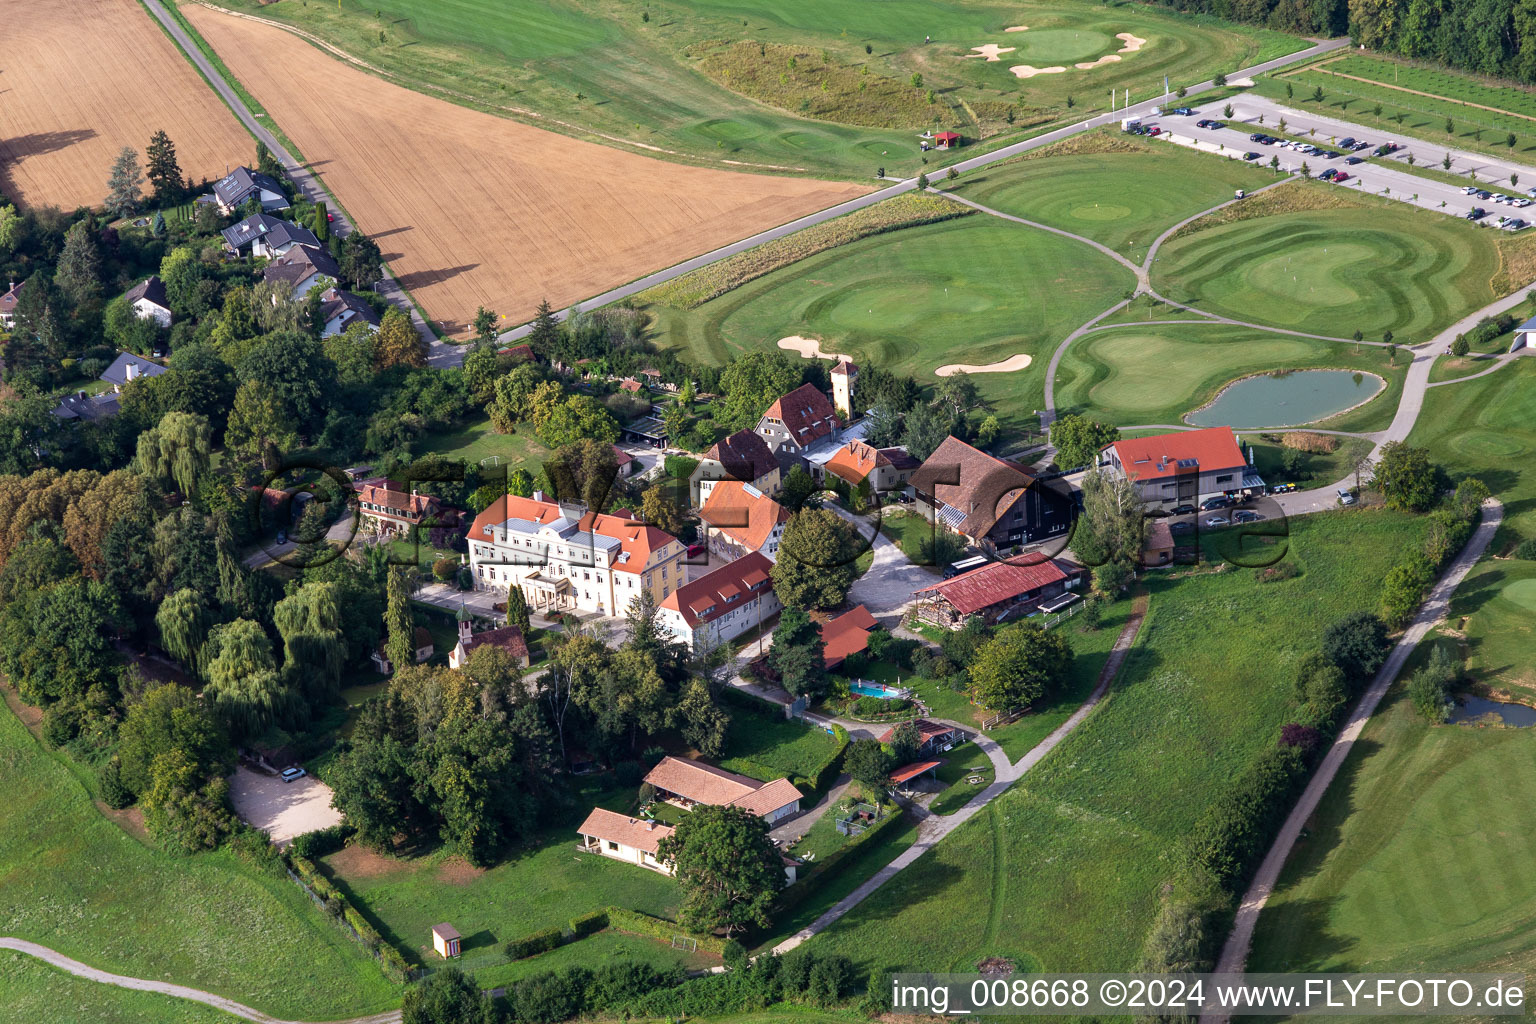 Vue aérienne de Superficie du terrain de golf Golfclub Schloss Kressbach à Kressbach dans le département Bade-Wurtemberg, Allemagne